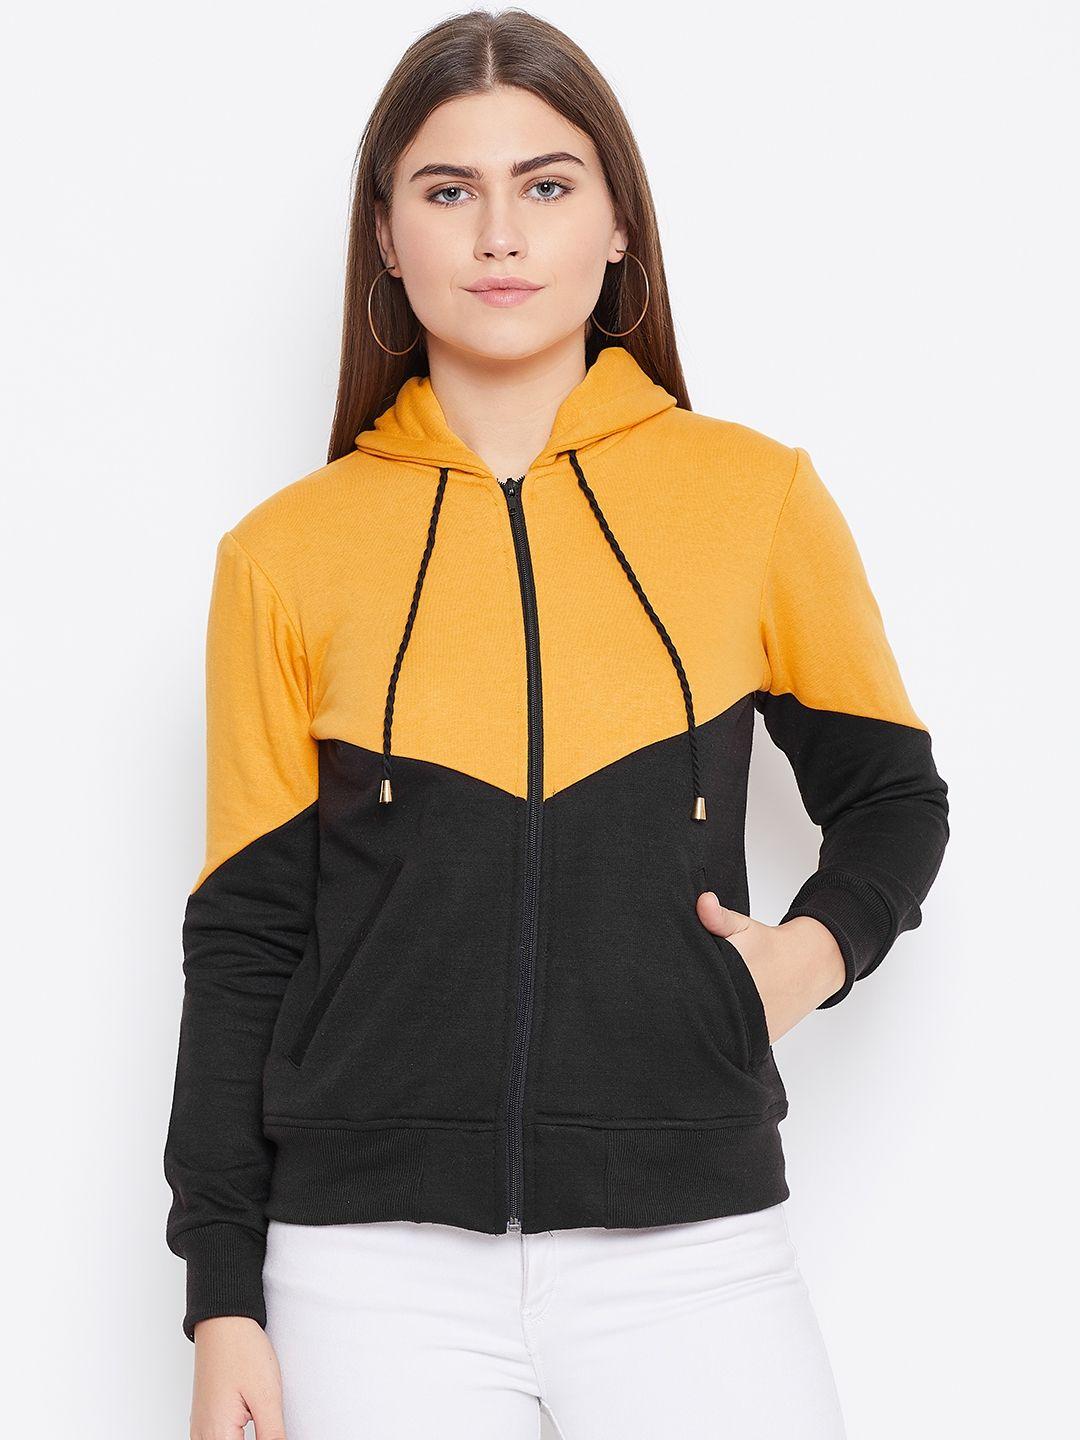 alsace lorraine paris women mustard yellow & black colourblocked hooded sweatshirt